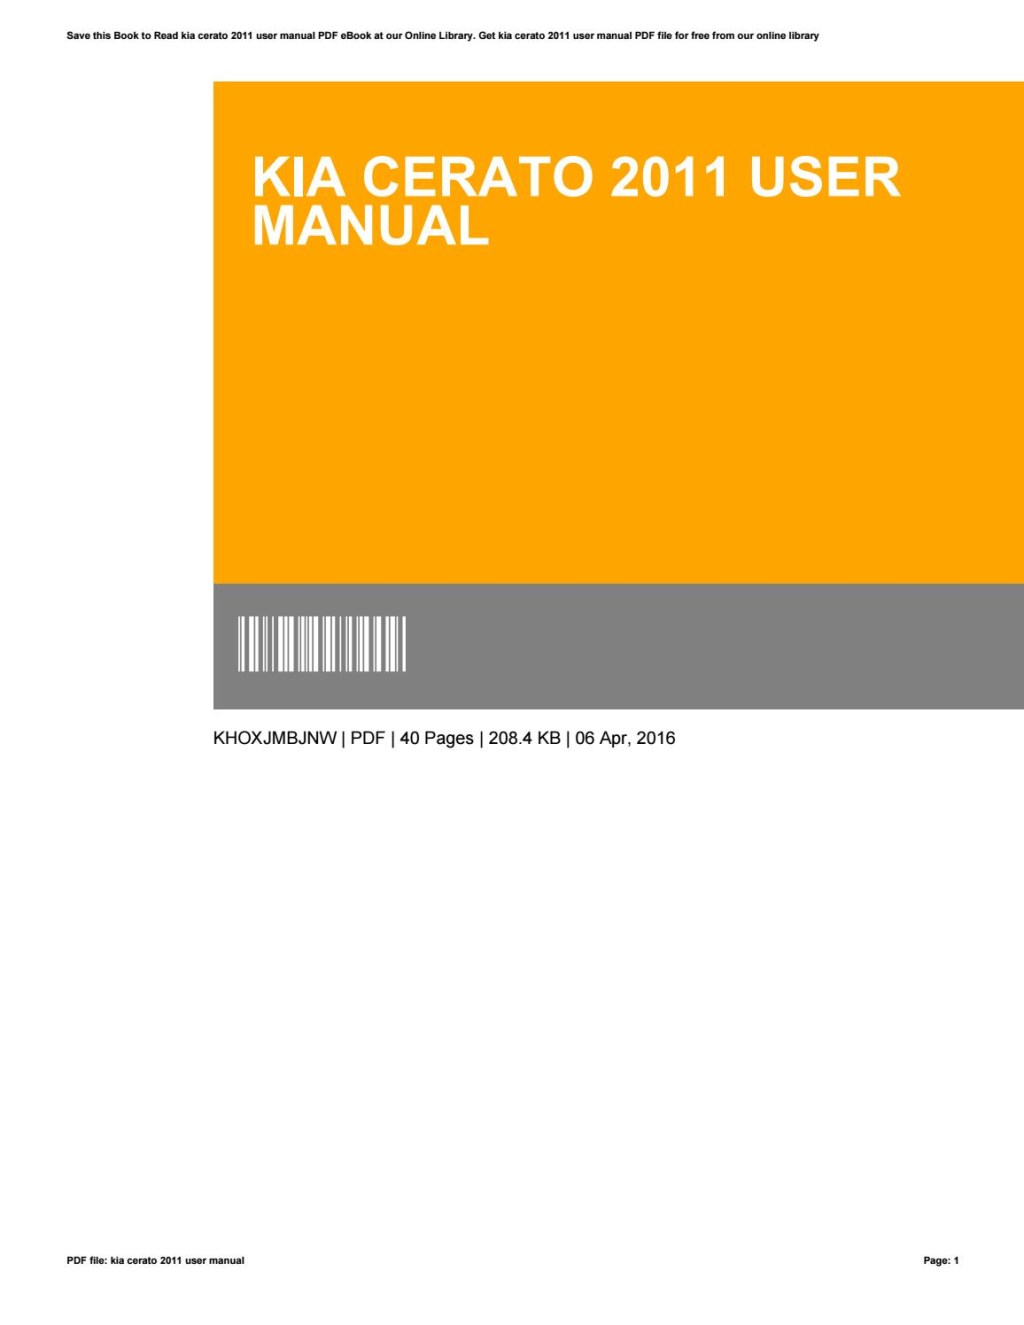 Picture of: Kia cerato  user manual by mnode – Issuu